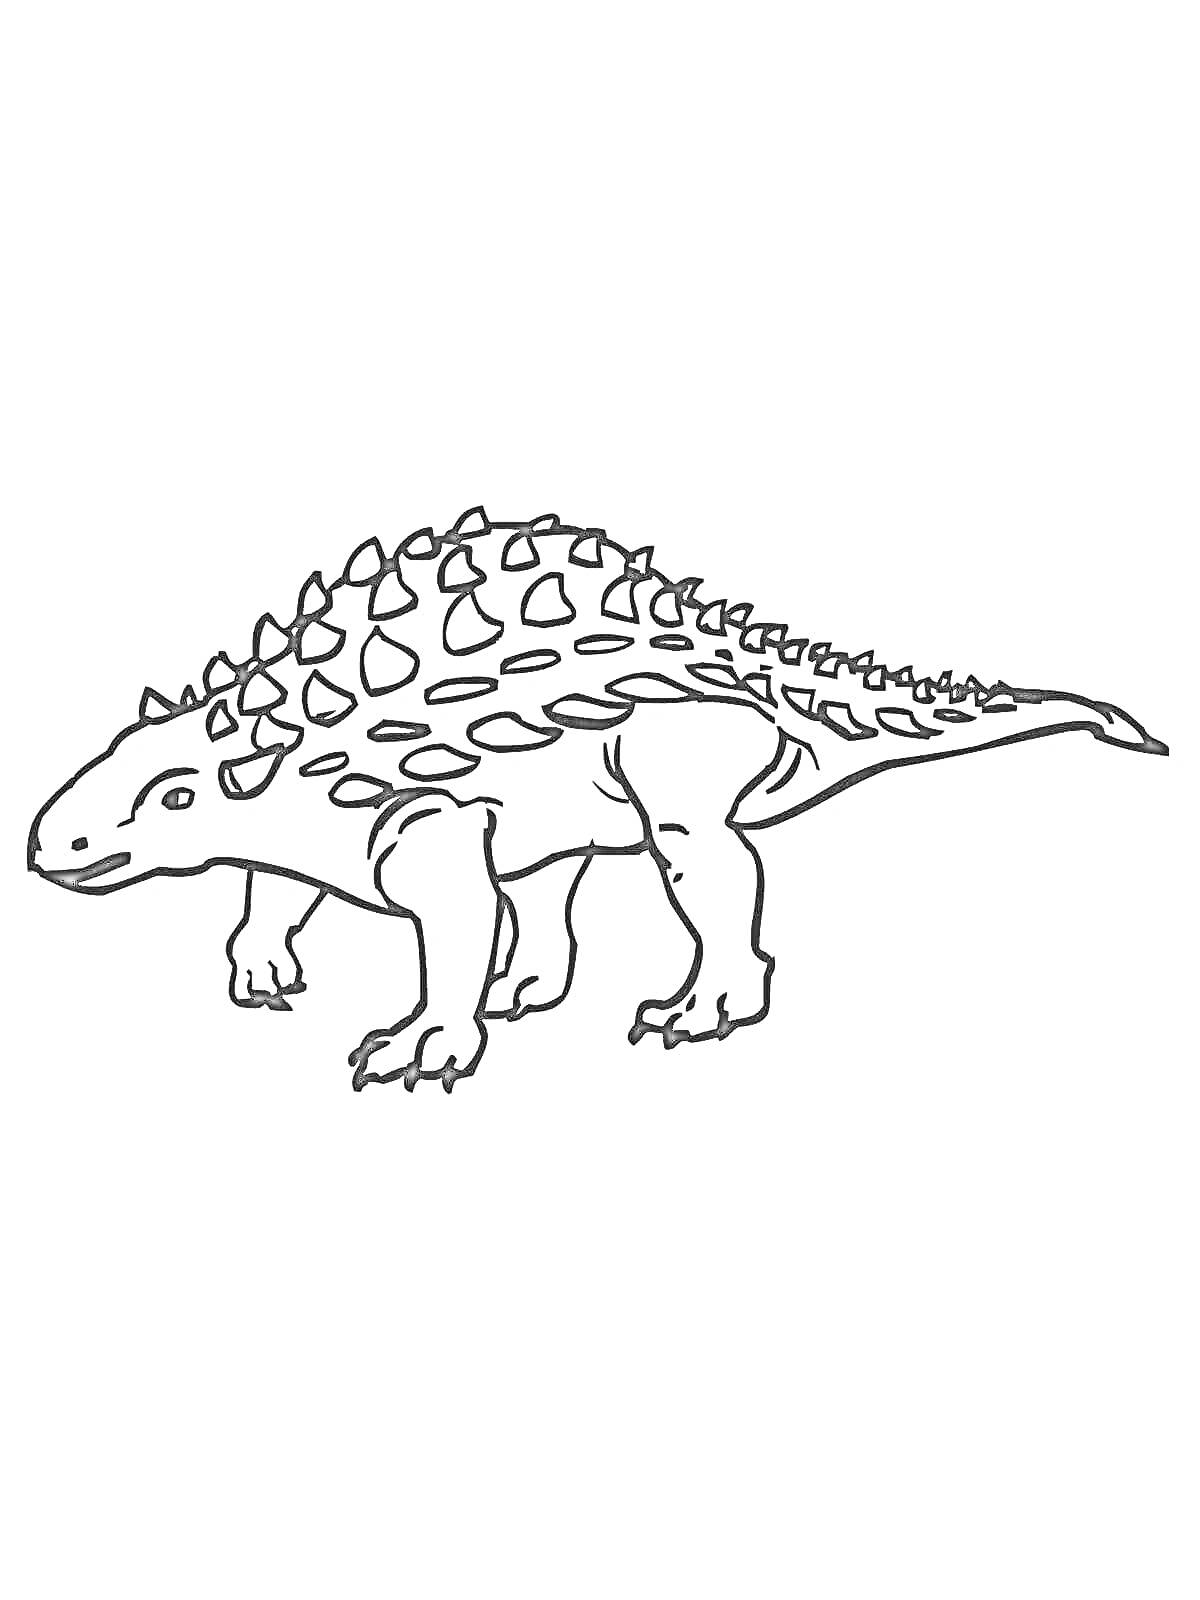 Анкилозавр с шипами на спине